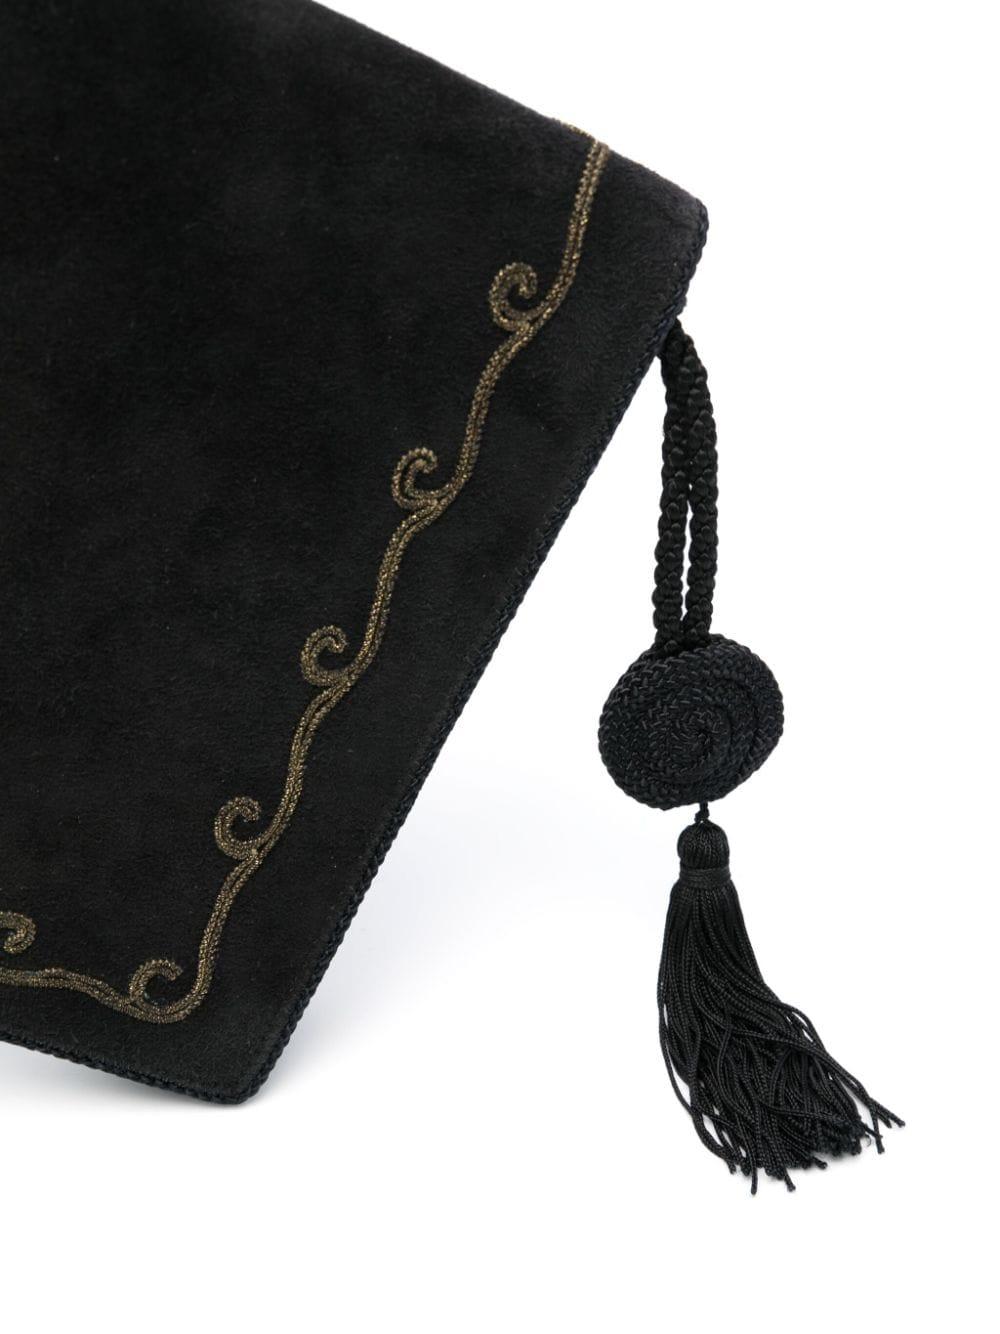 Women's 1970s Christian Dior Black Embroidered Suede Shoulder Bag For Sale